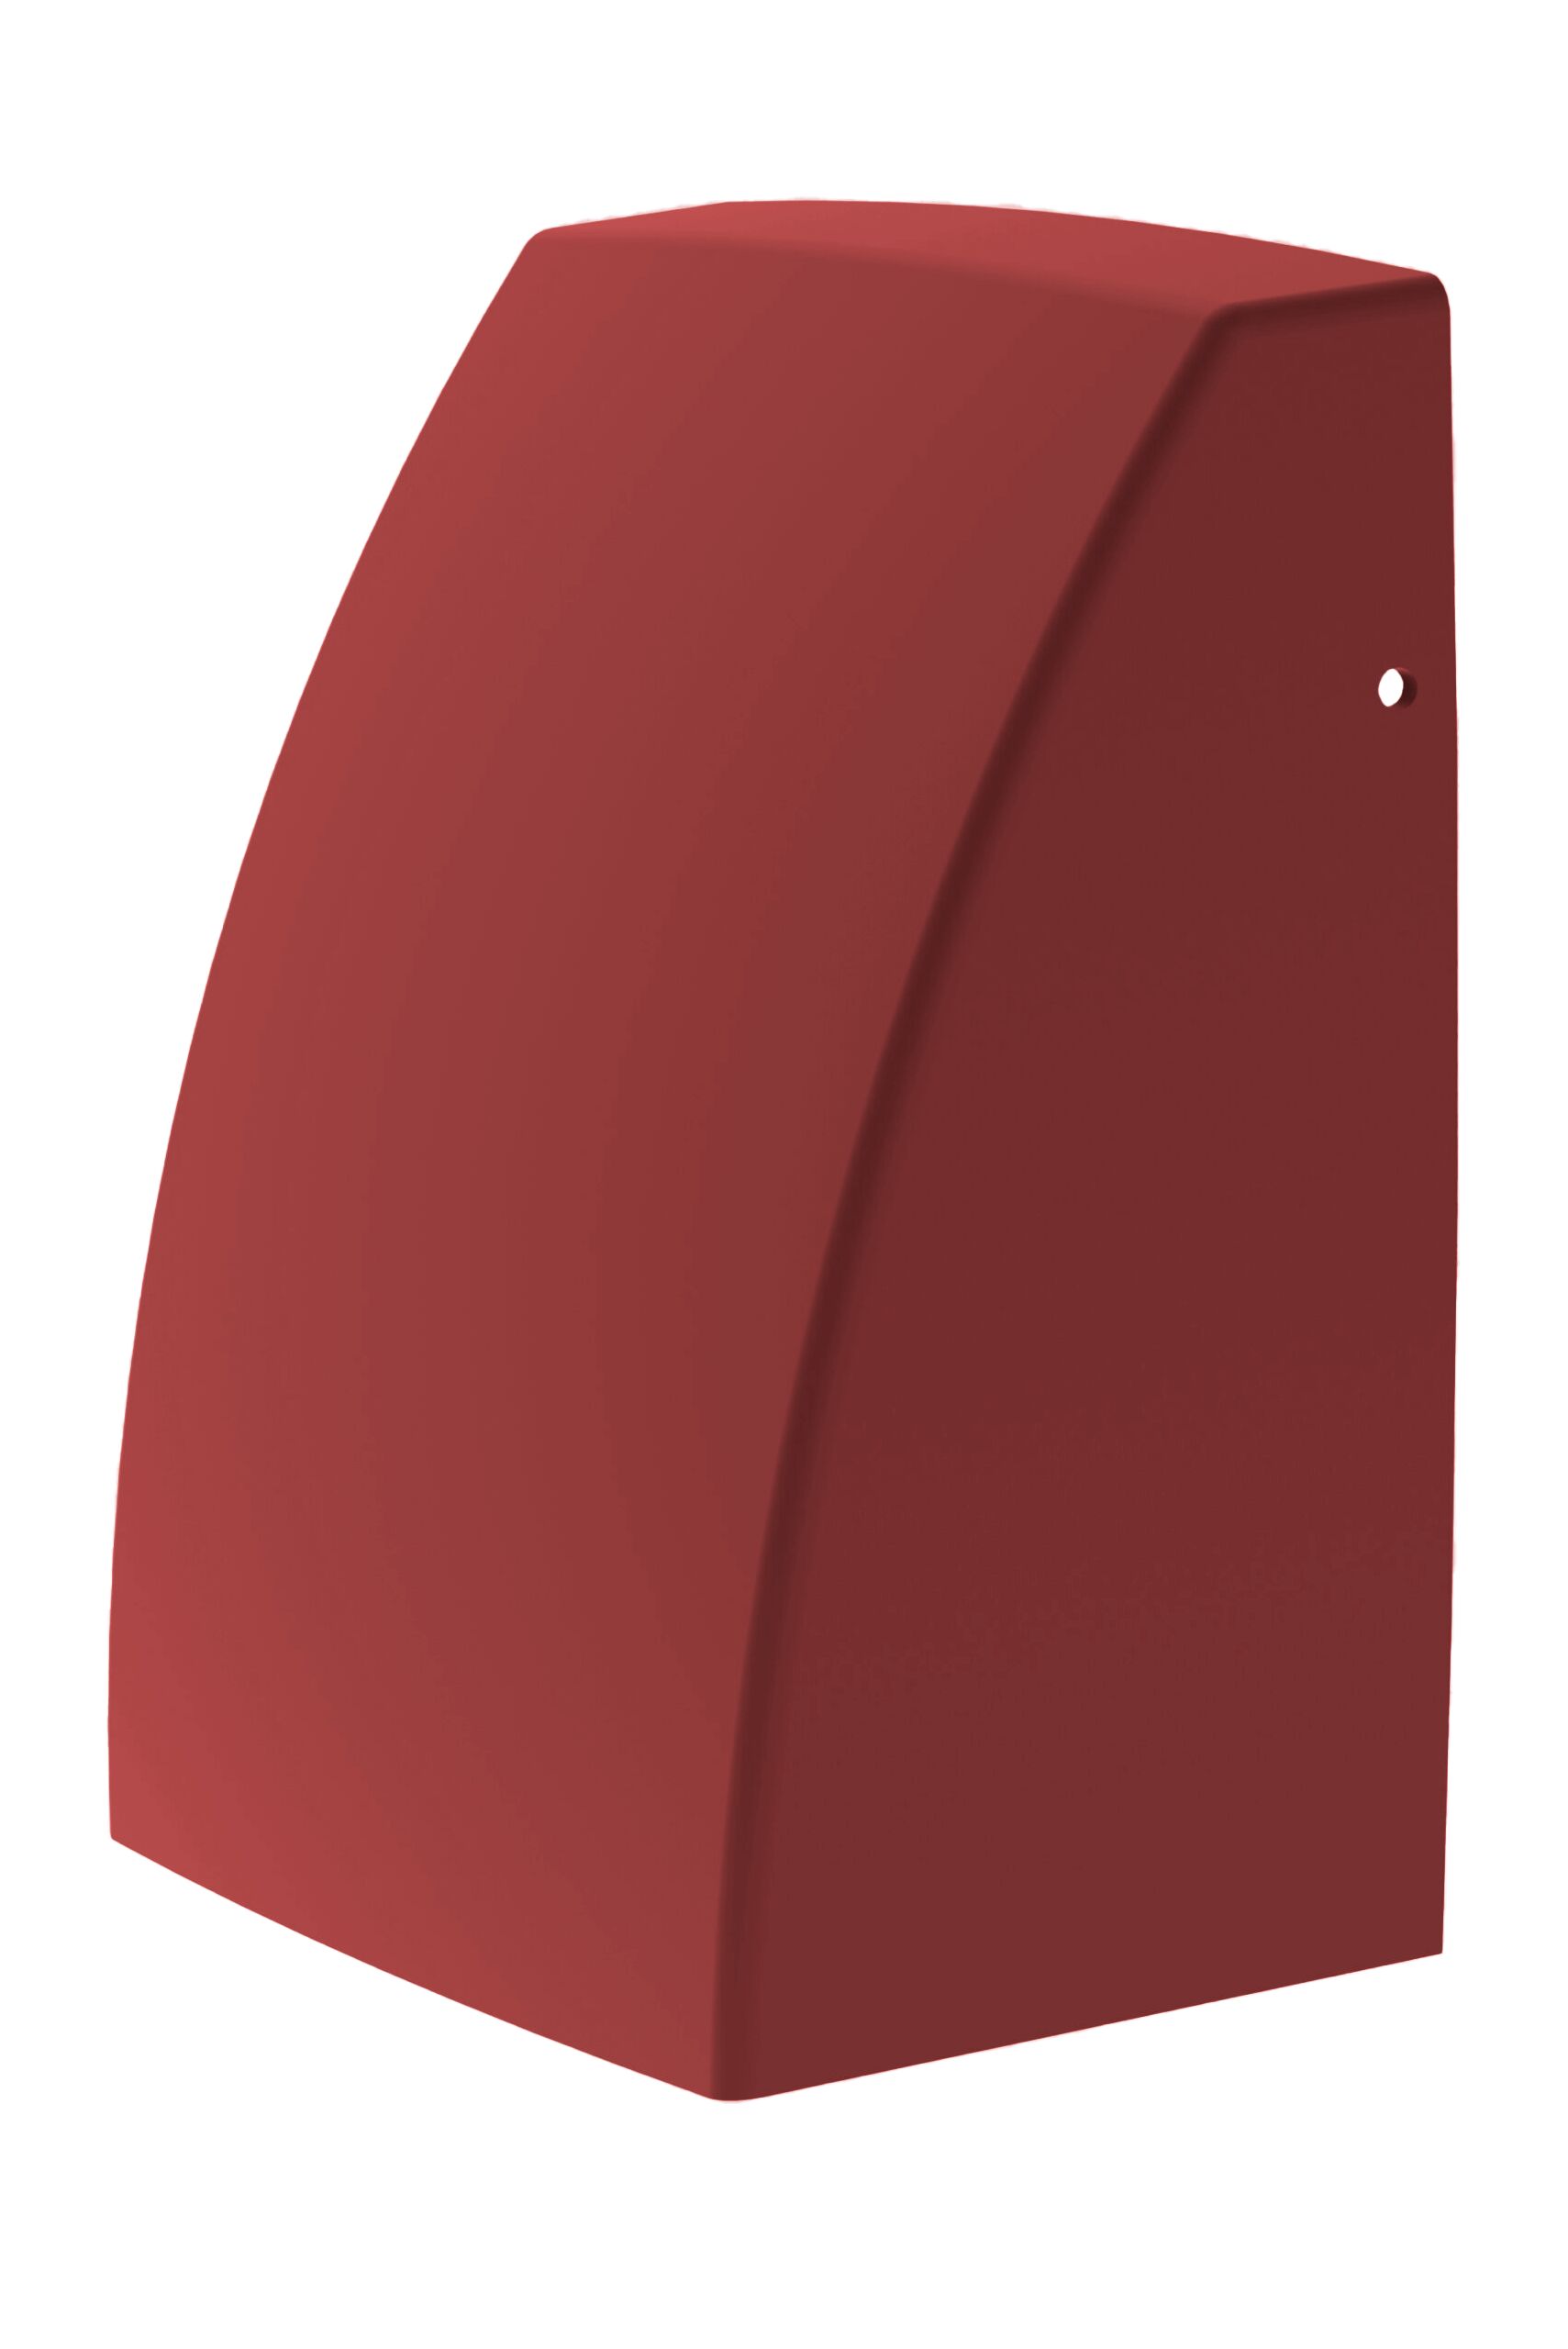 Ветрозащитный козырек STORM COVER серый Vilpe, красный (аналог RR 29, RAL 3009)